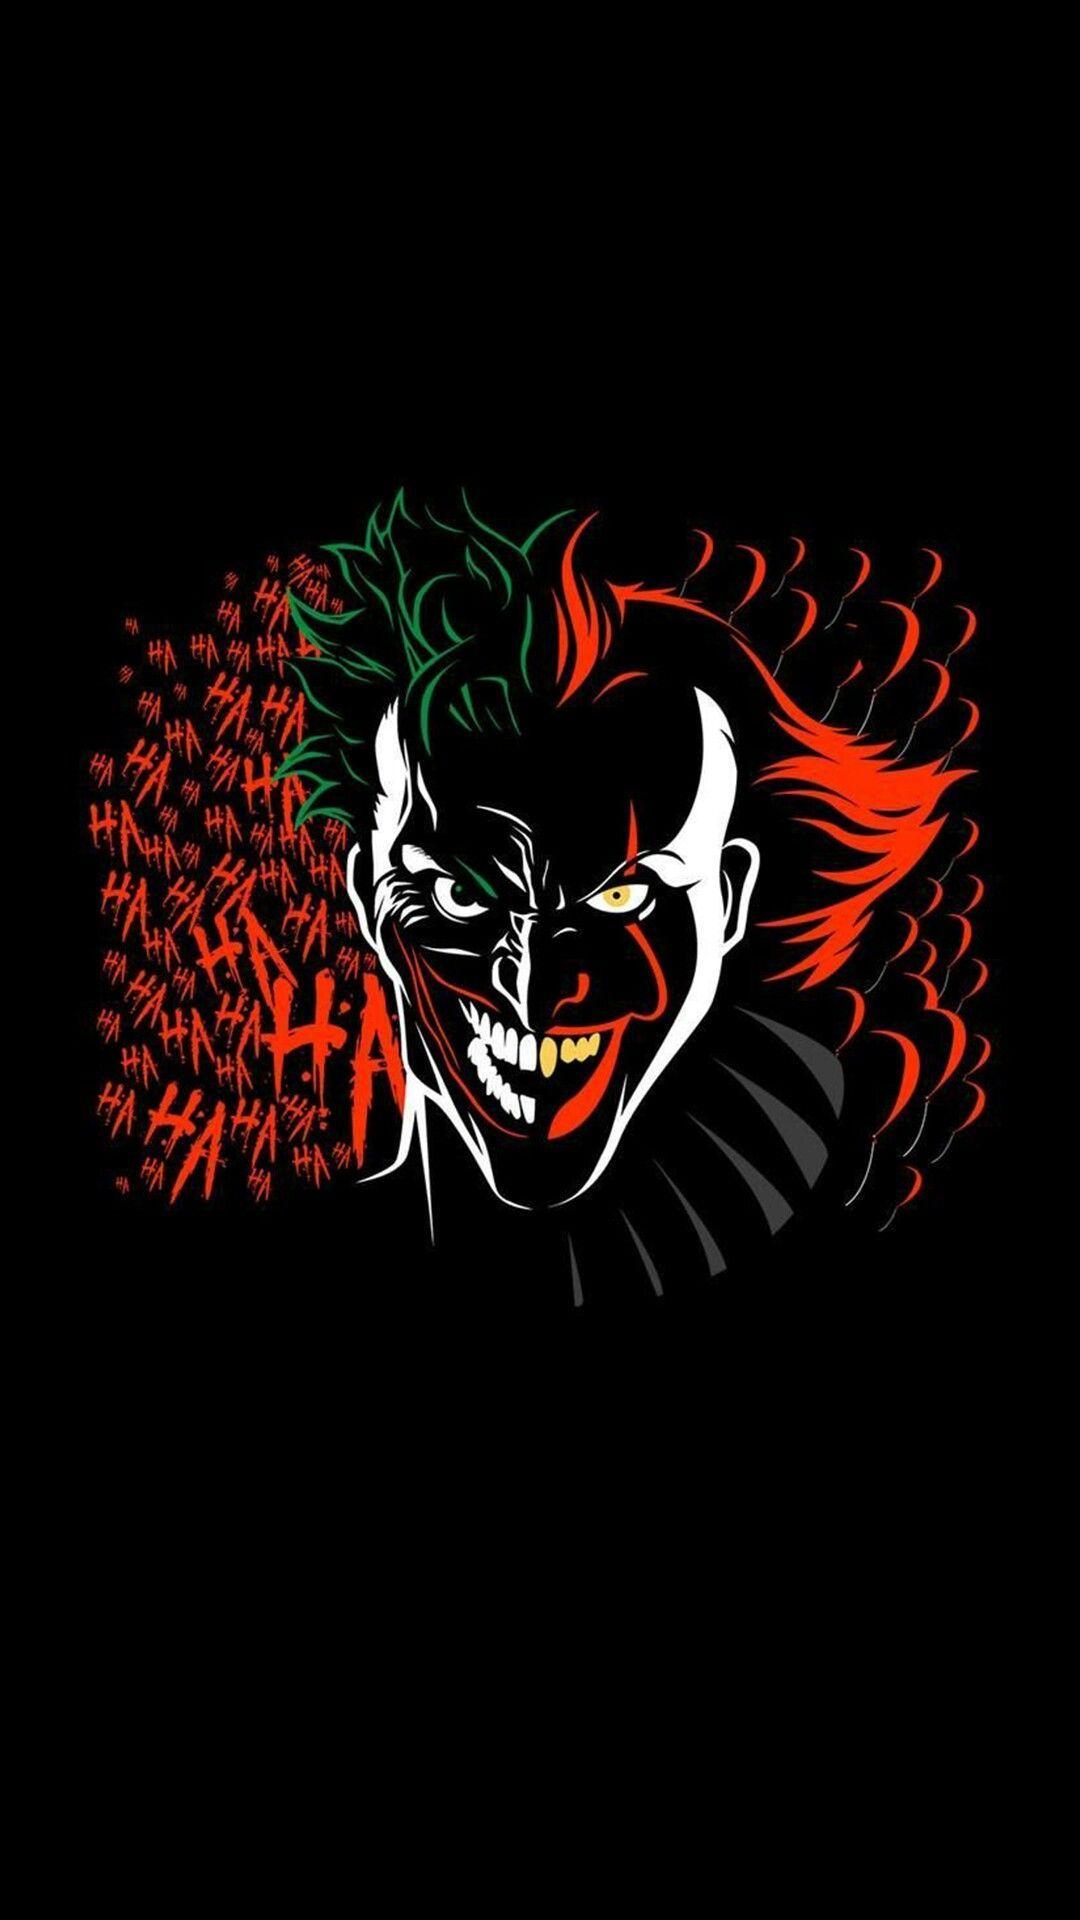 40 Gambar Joker Wallpaper Hd Pinterest terbaru 2020